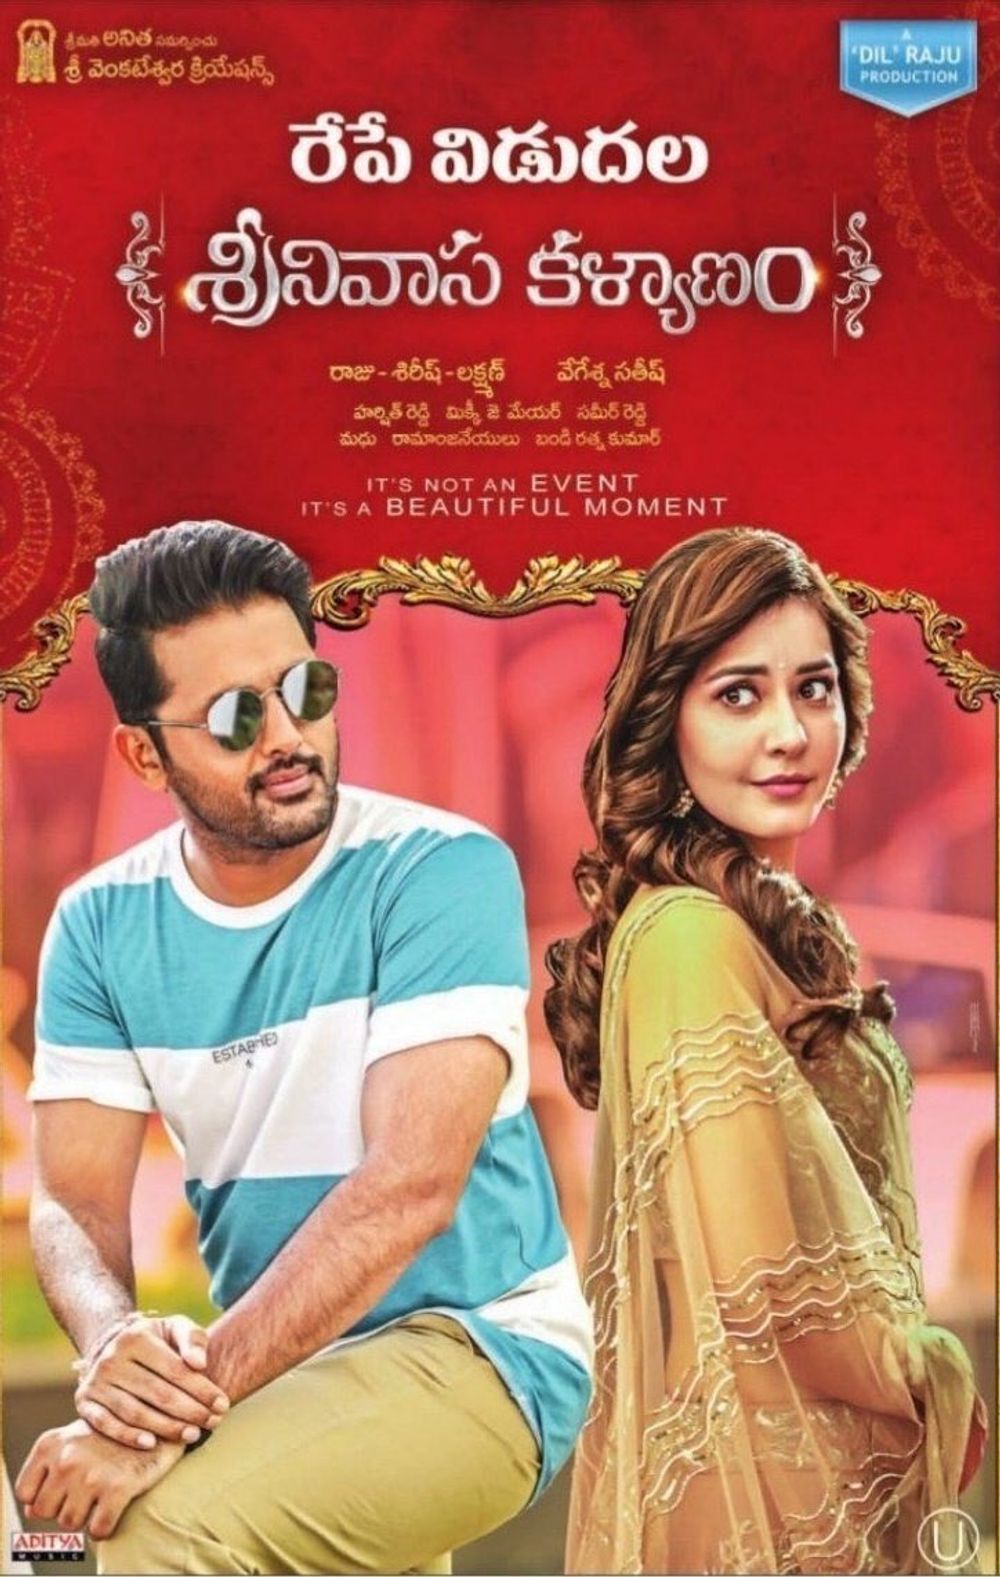 Srinivasa Kalyanam is a Hindi dubbed Telugu movie